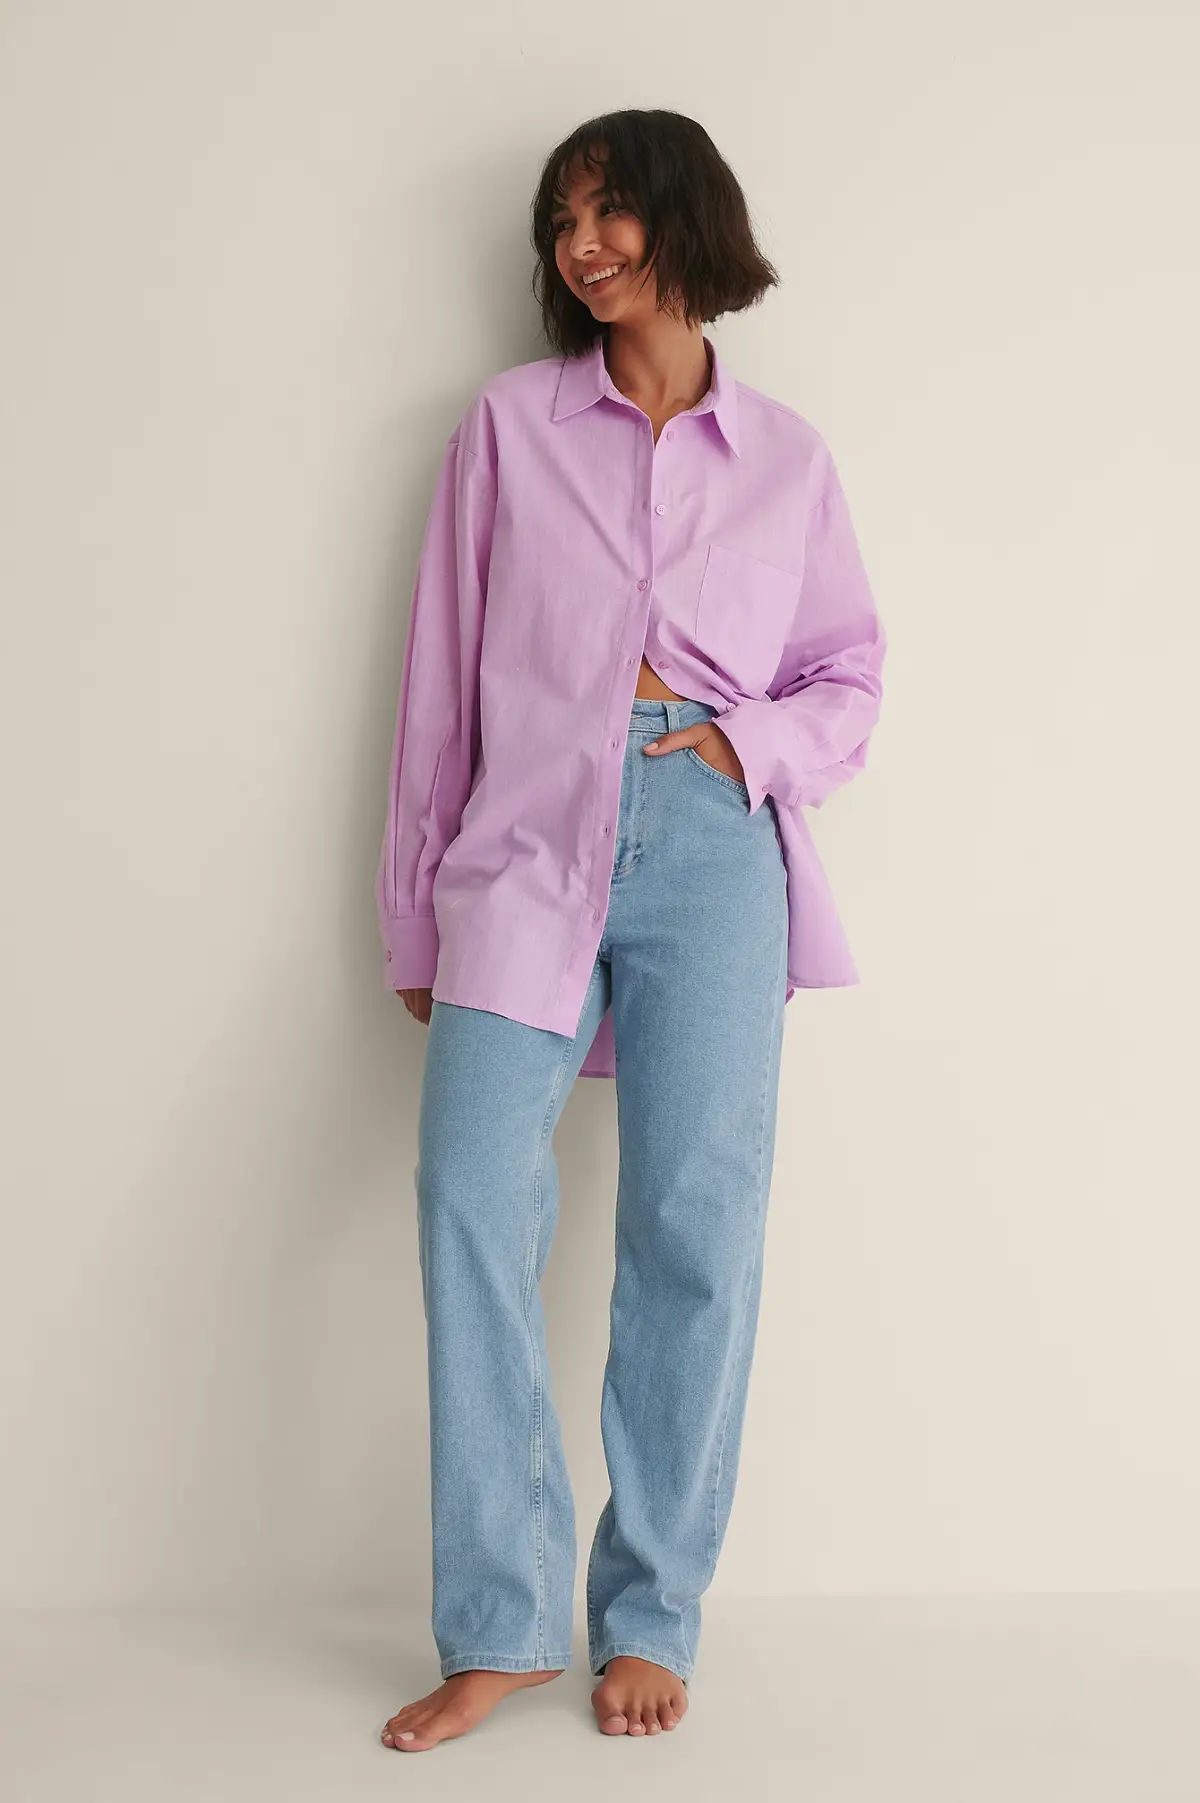 welche hemden sind 2023 modern frau traegt oversized hemd in lila rosa und mom jeans